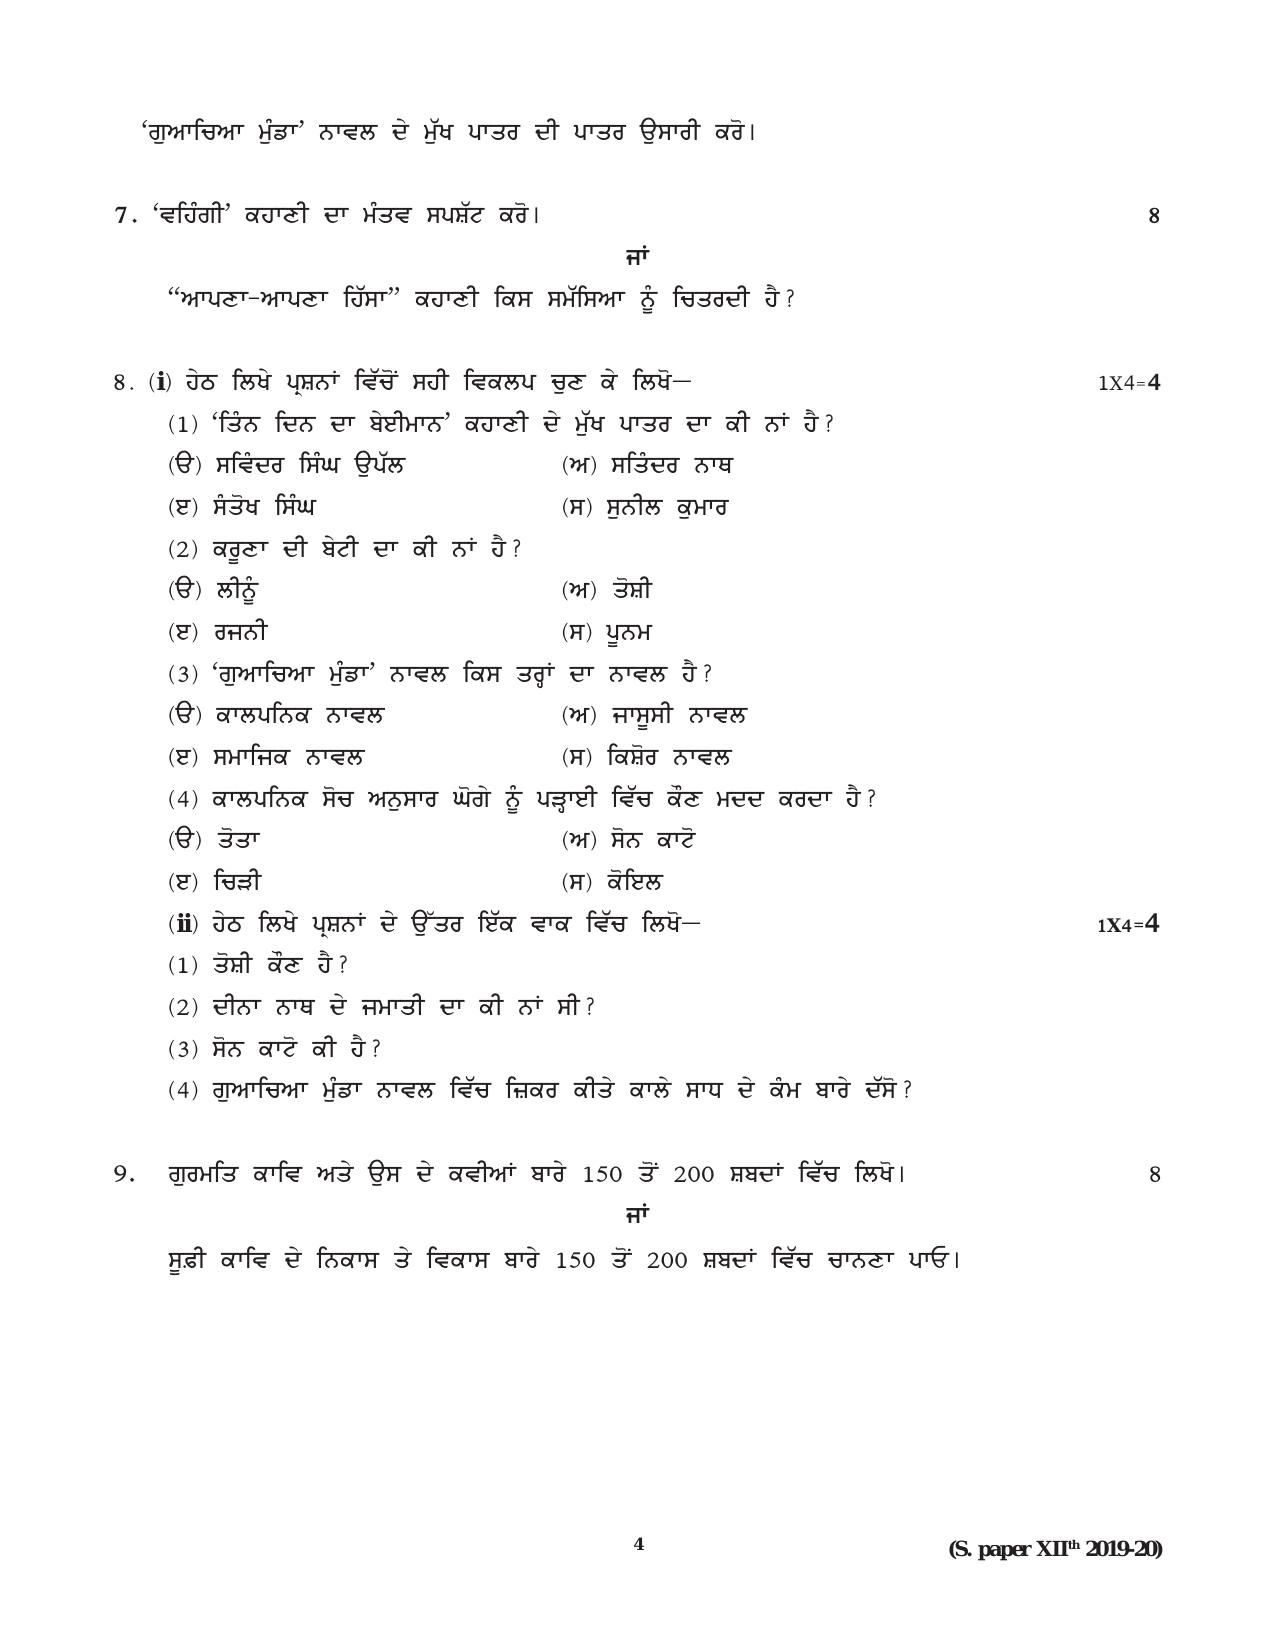 CBSE Class 12 Punjabi -Sample Paper 2019-20 - Page 4